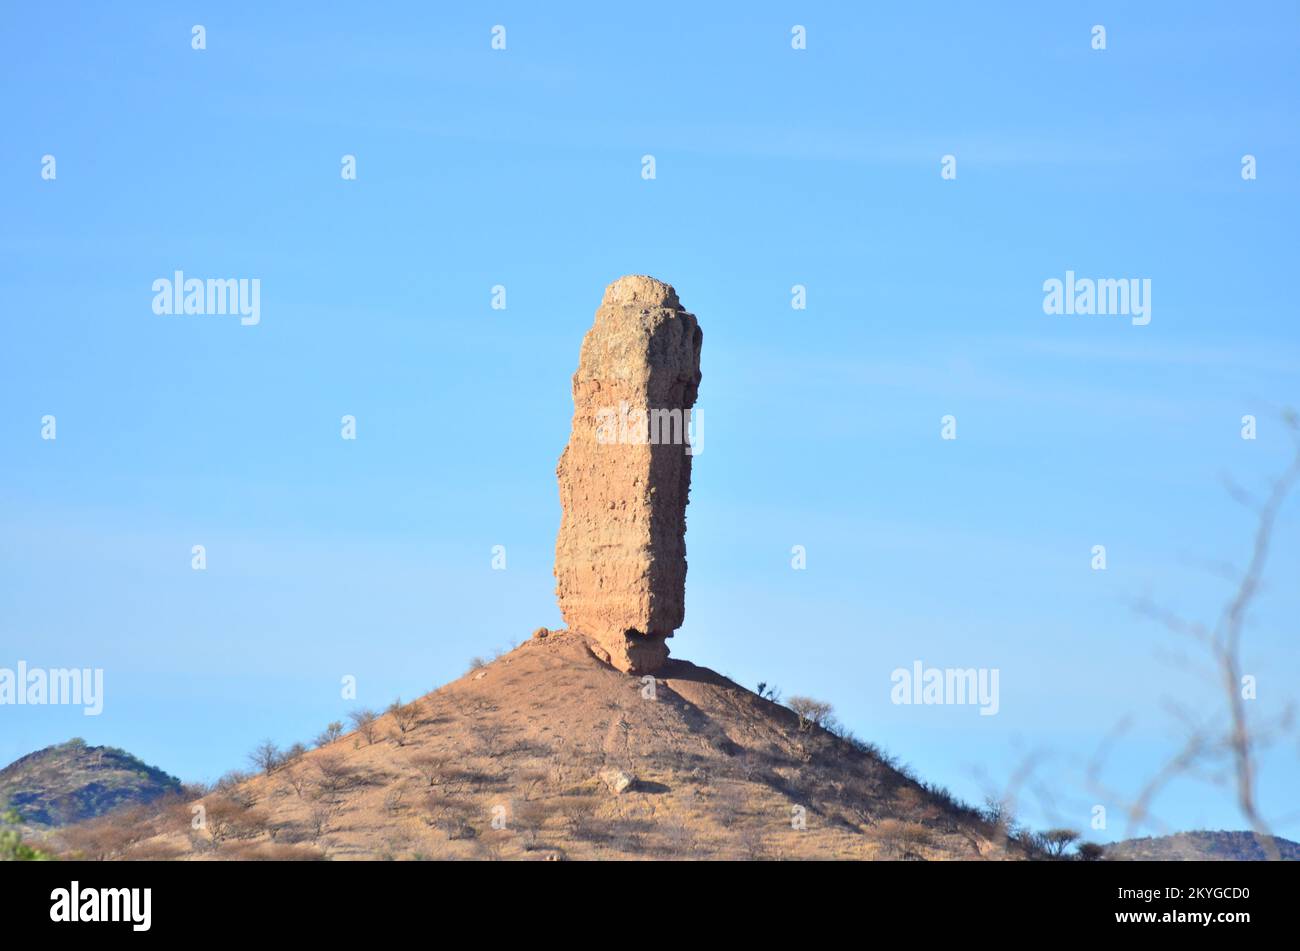 Vingerklip tall Rock in darmaland namibia Africa Stock Photo